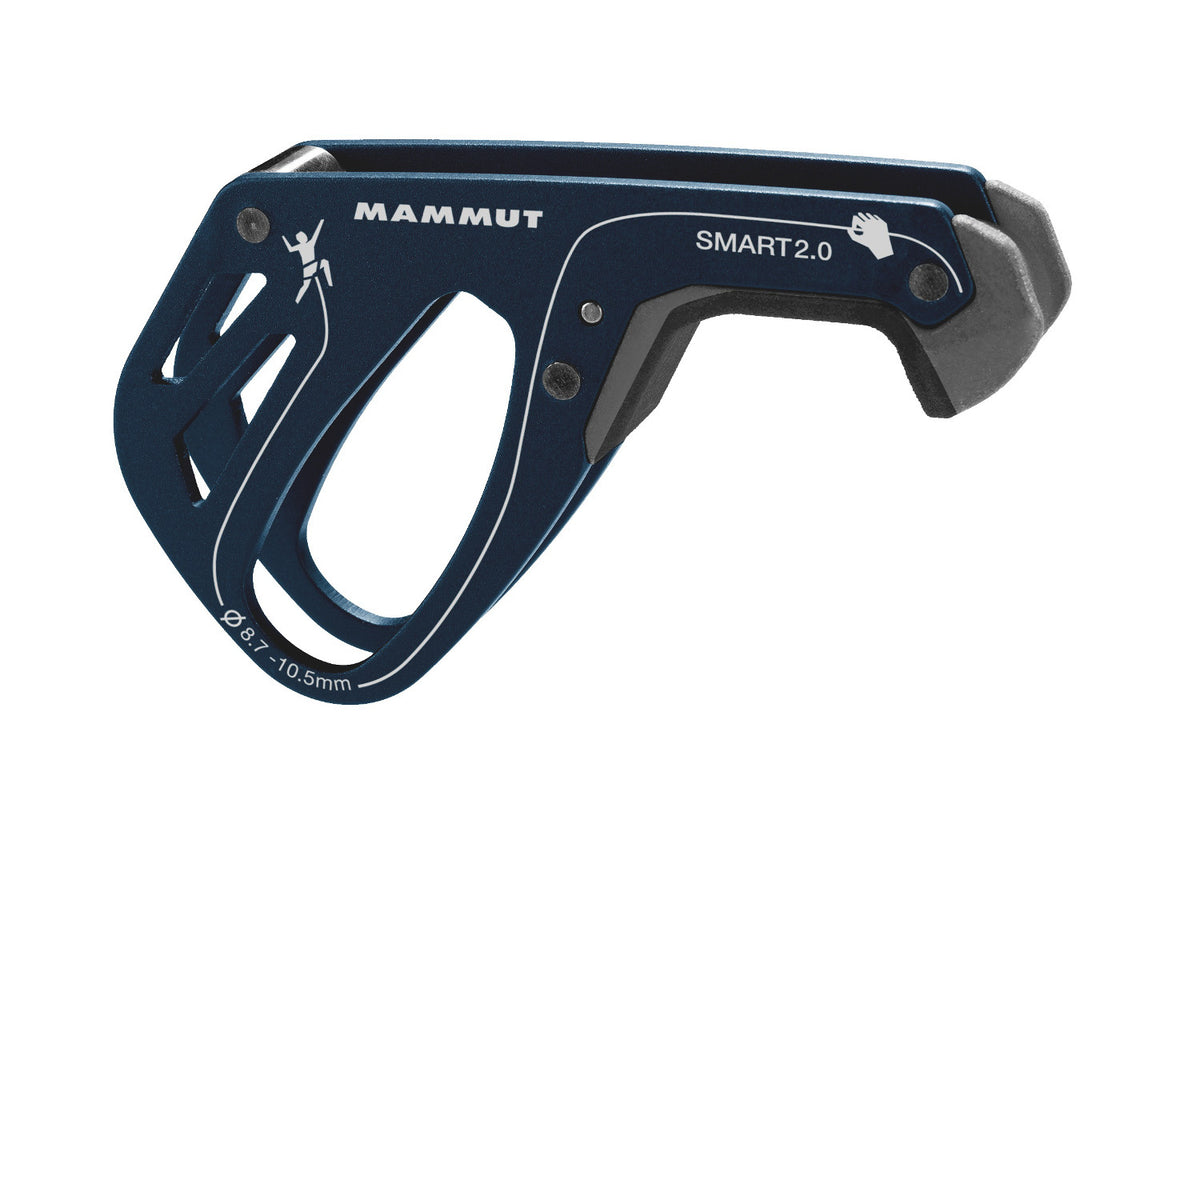 Mammut Smart 2.0 Belay Device, shown side on in blue colour